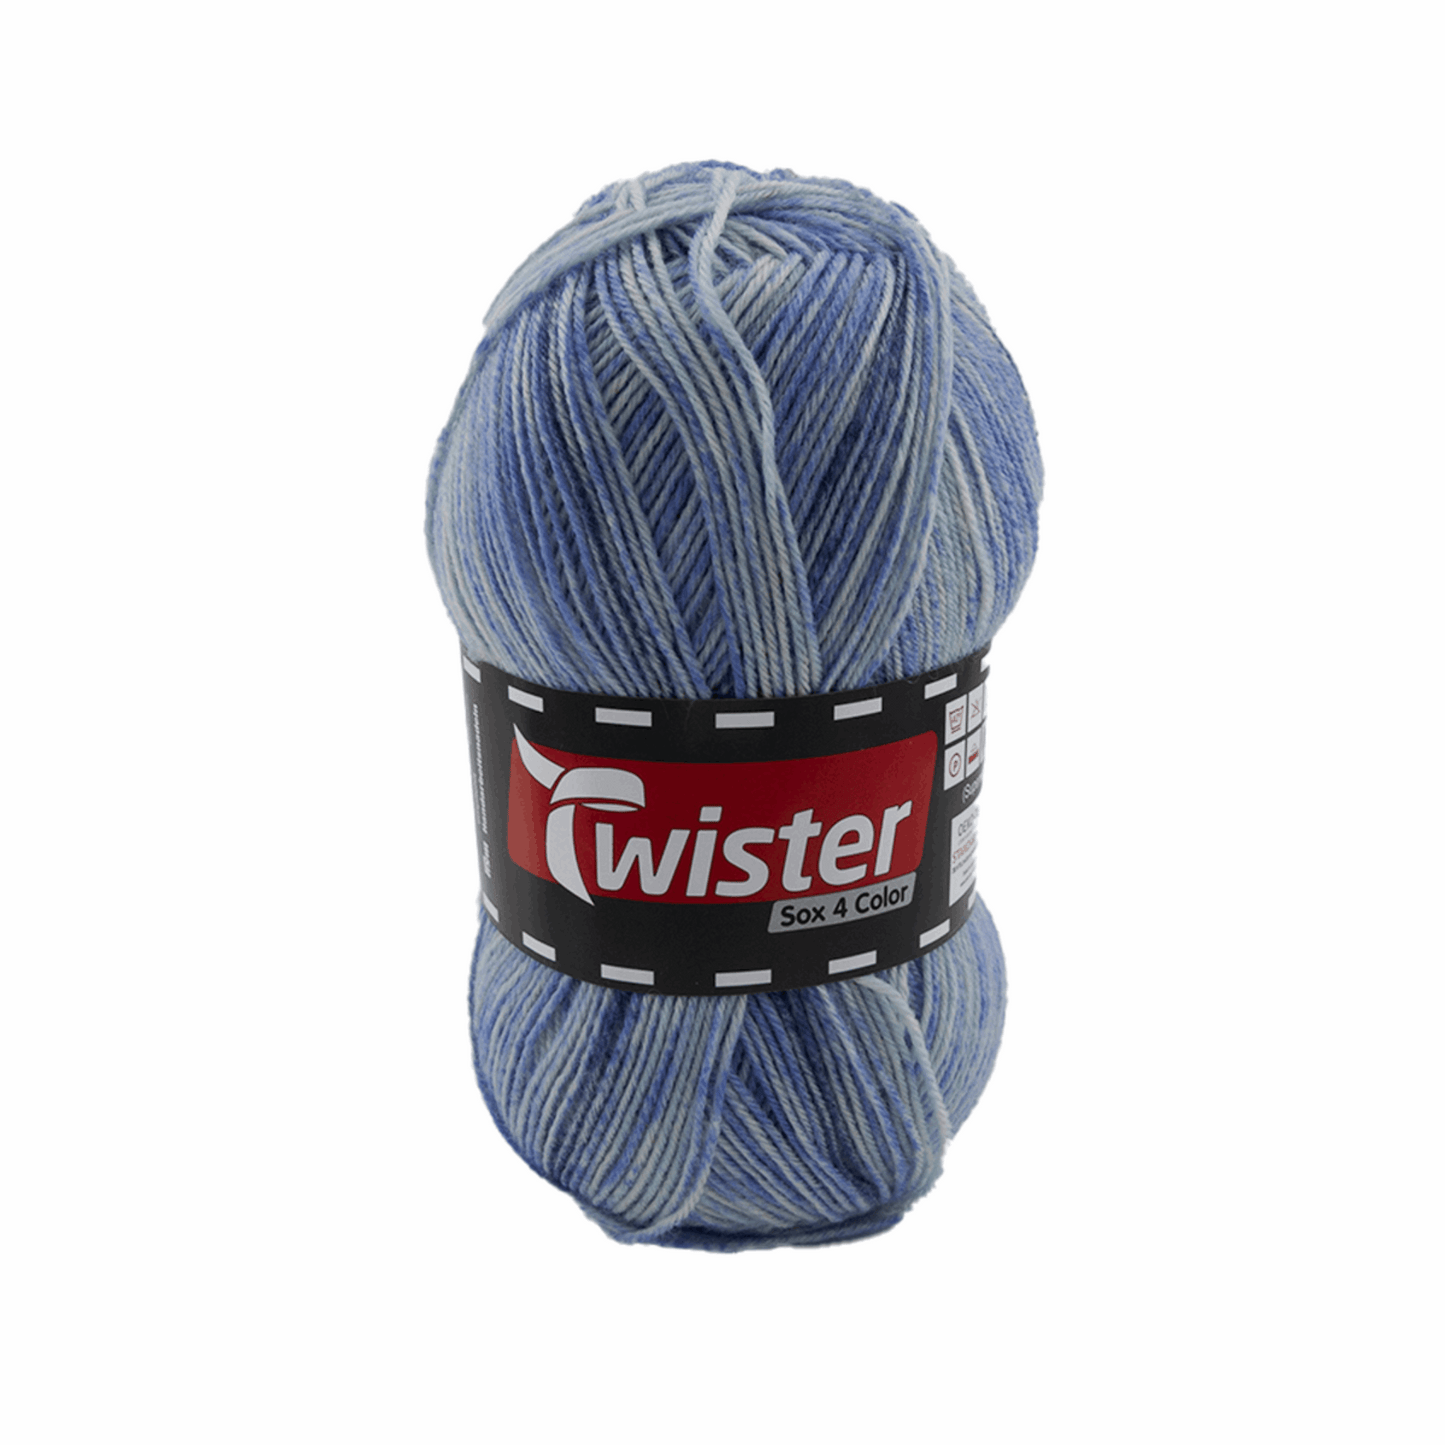 Twister Sox4 Color superwash, fjord multi, 98306, color 154